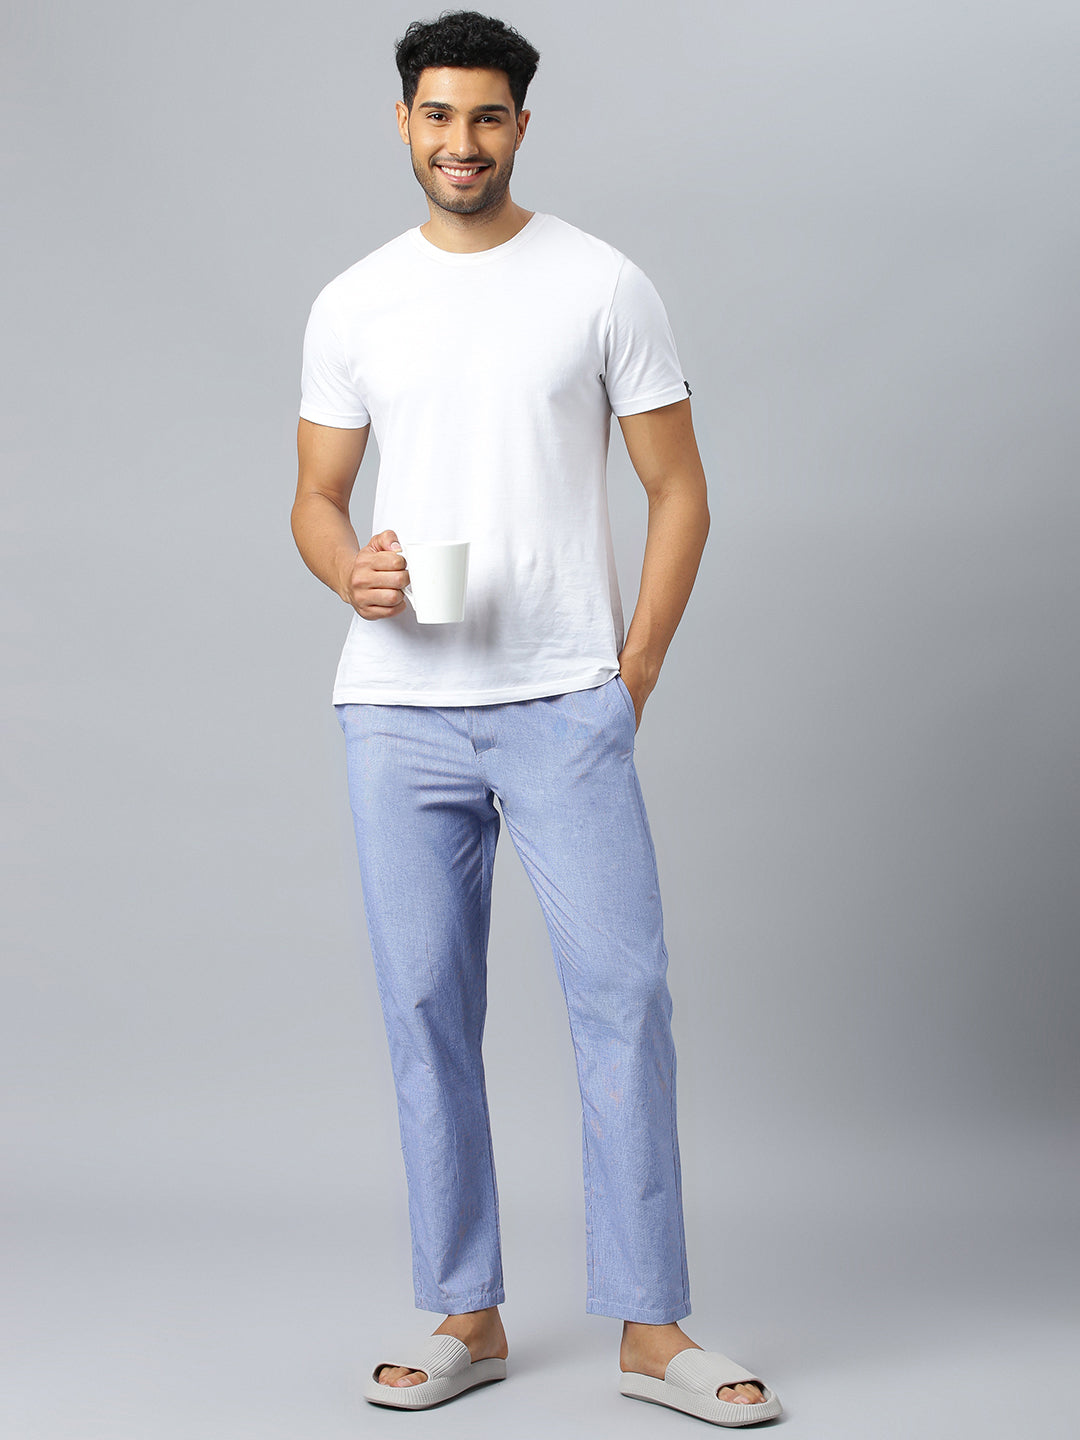 Don Vino Men's Light Blue Printed Lounge Pants